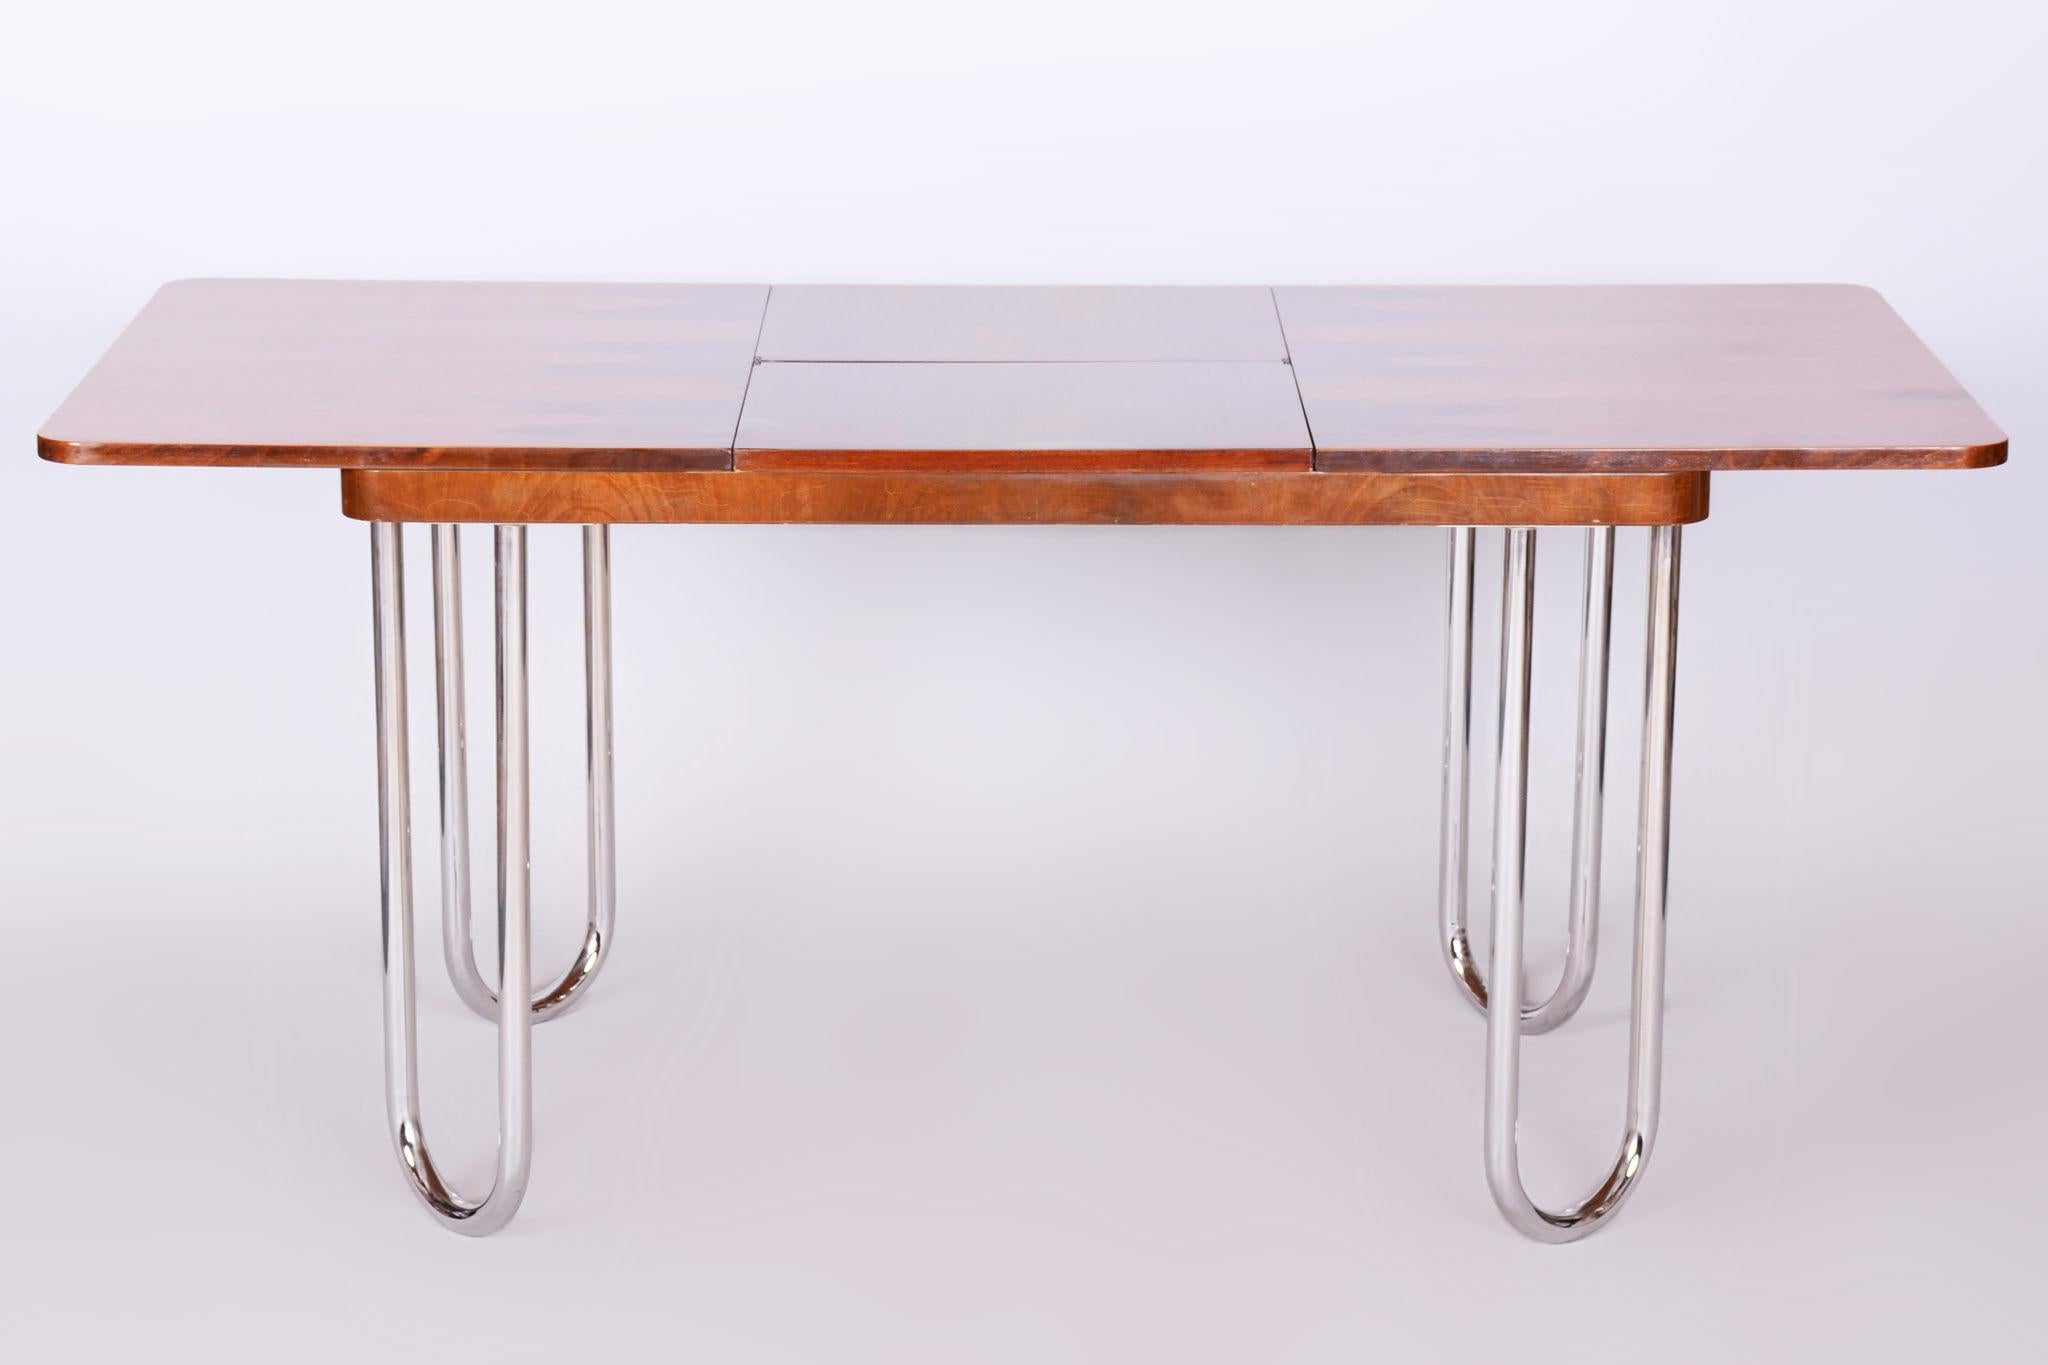 Czech Bauhaus Chrome Folding Dining Table by Halabala, 1930s, Restored, Walnut For Sale 1